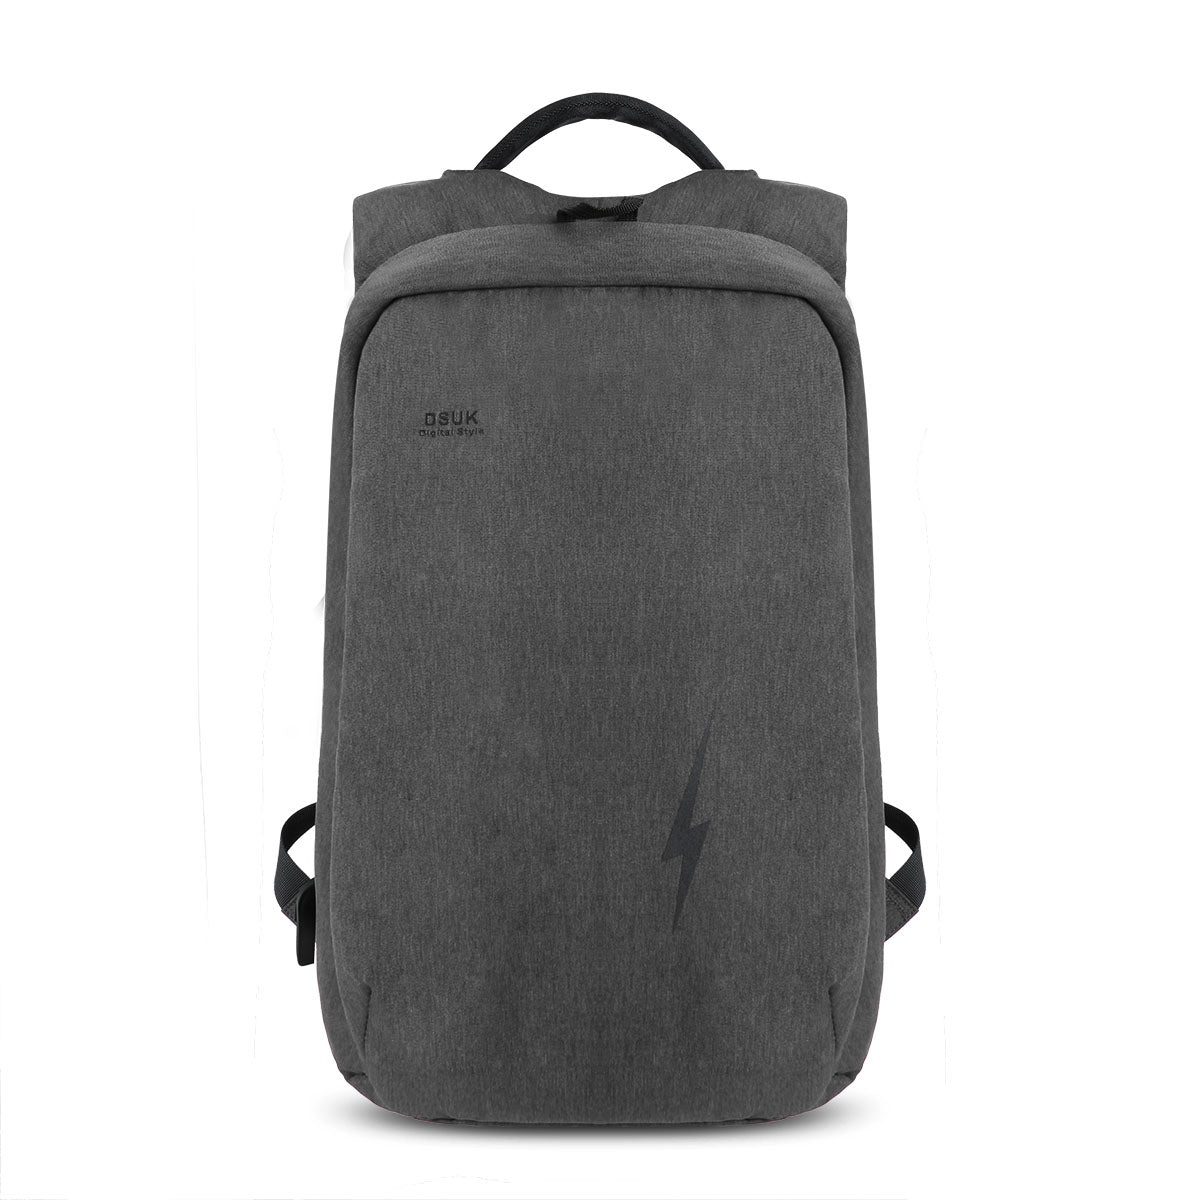 LYDC Laptop Backpack Bag